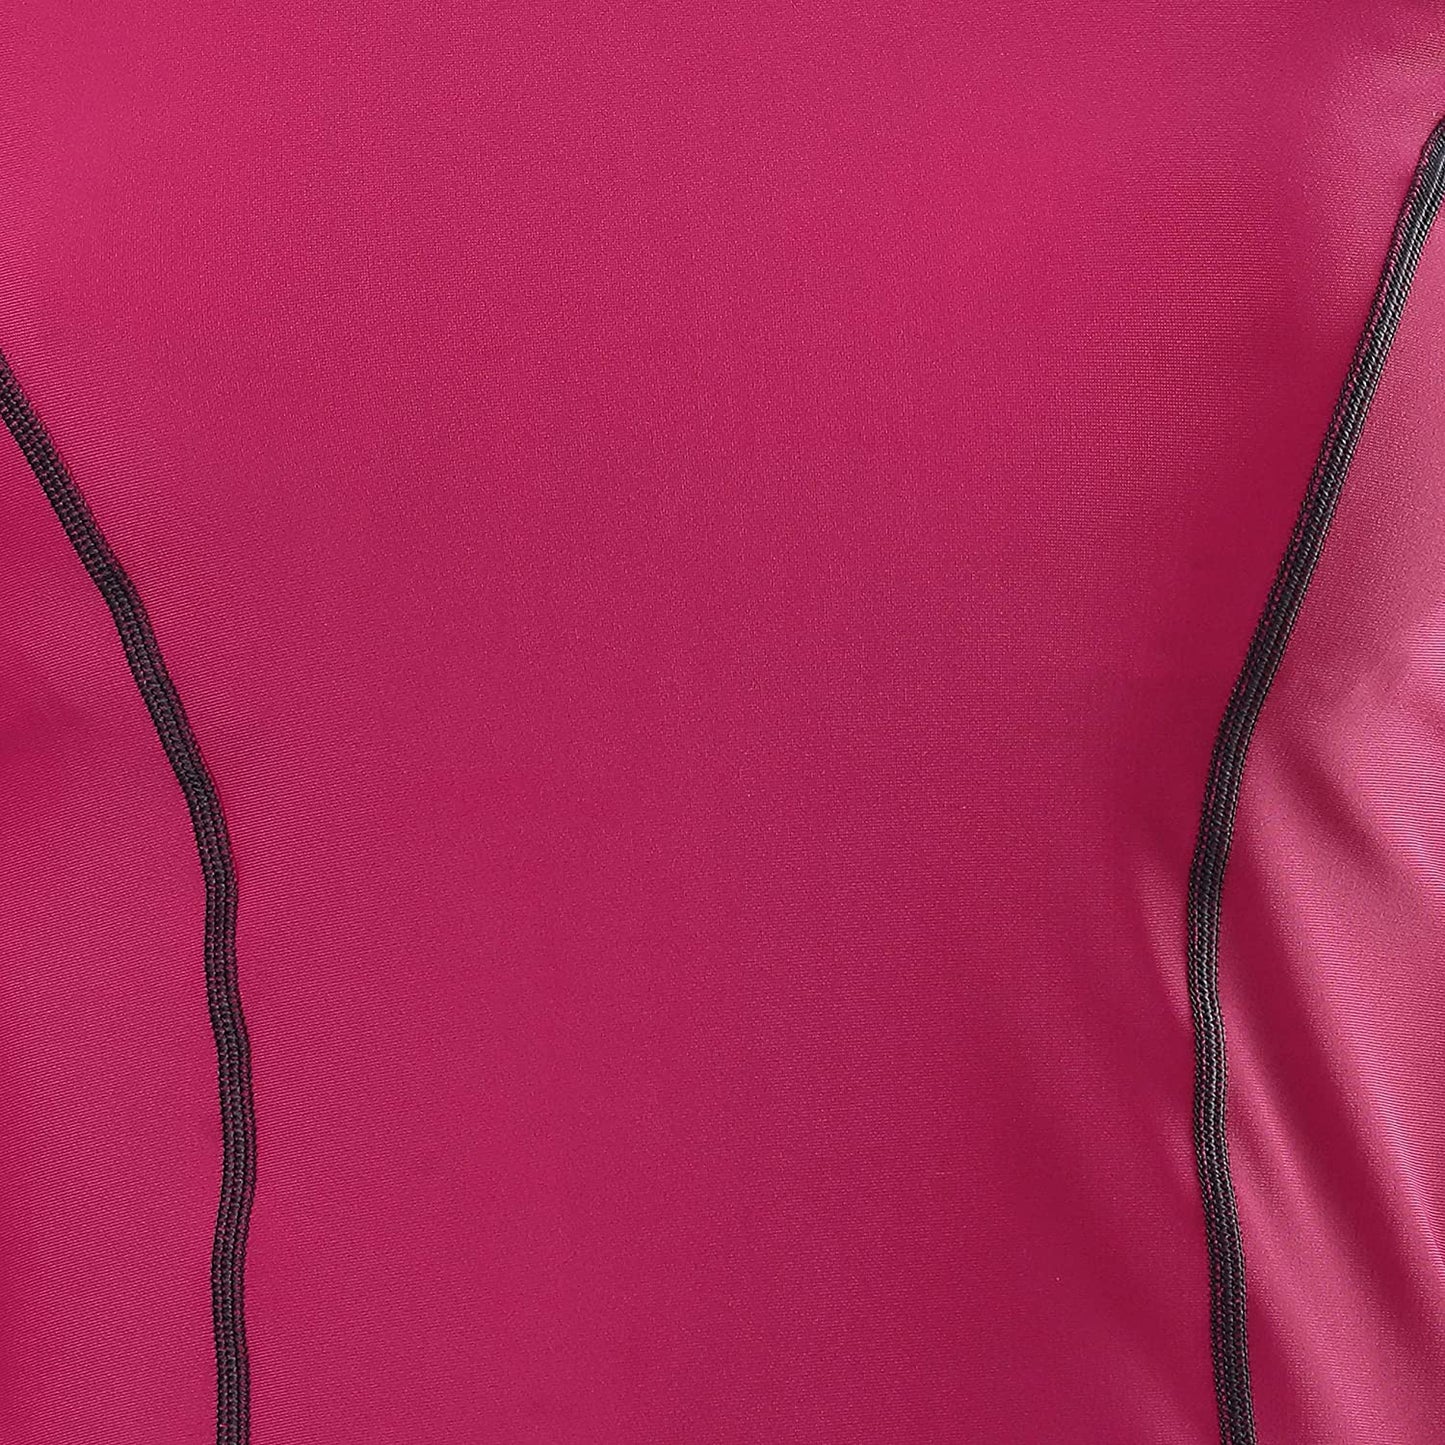 Speedo Female Solid Long Sleeve Rashtop, Berry/True Navy - Best Price online Prokicksports.com